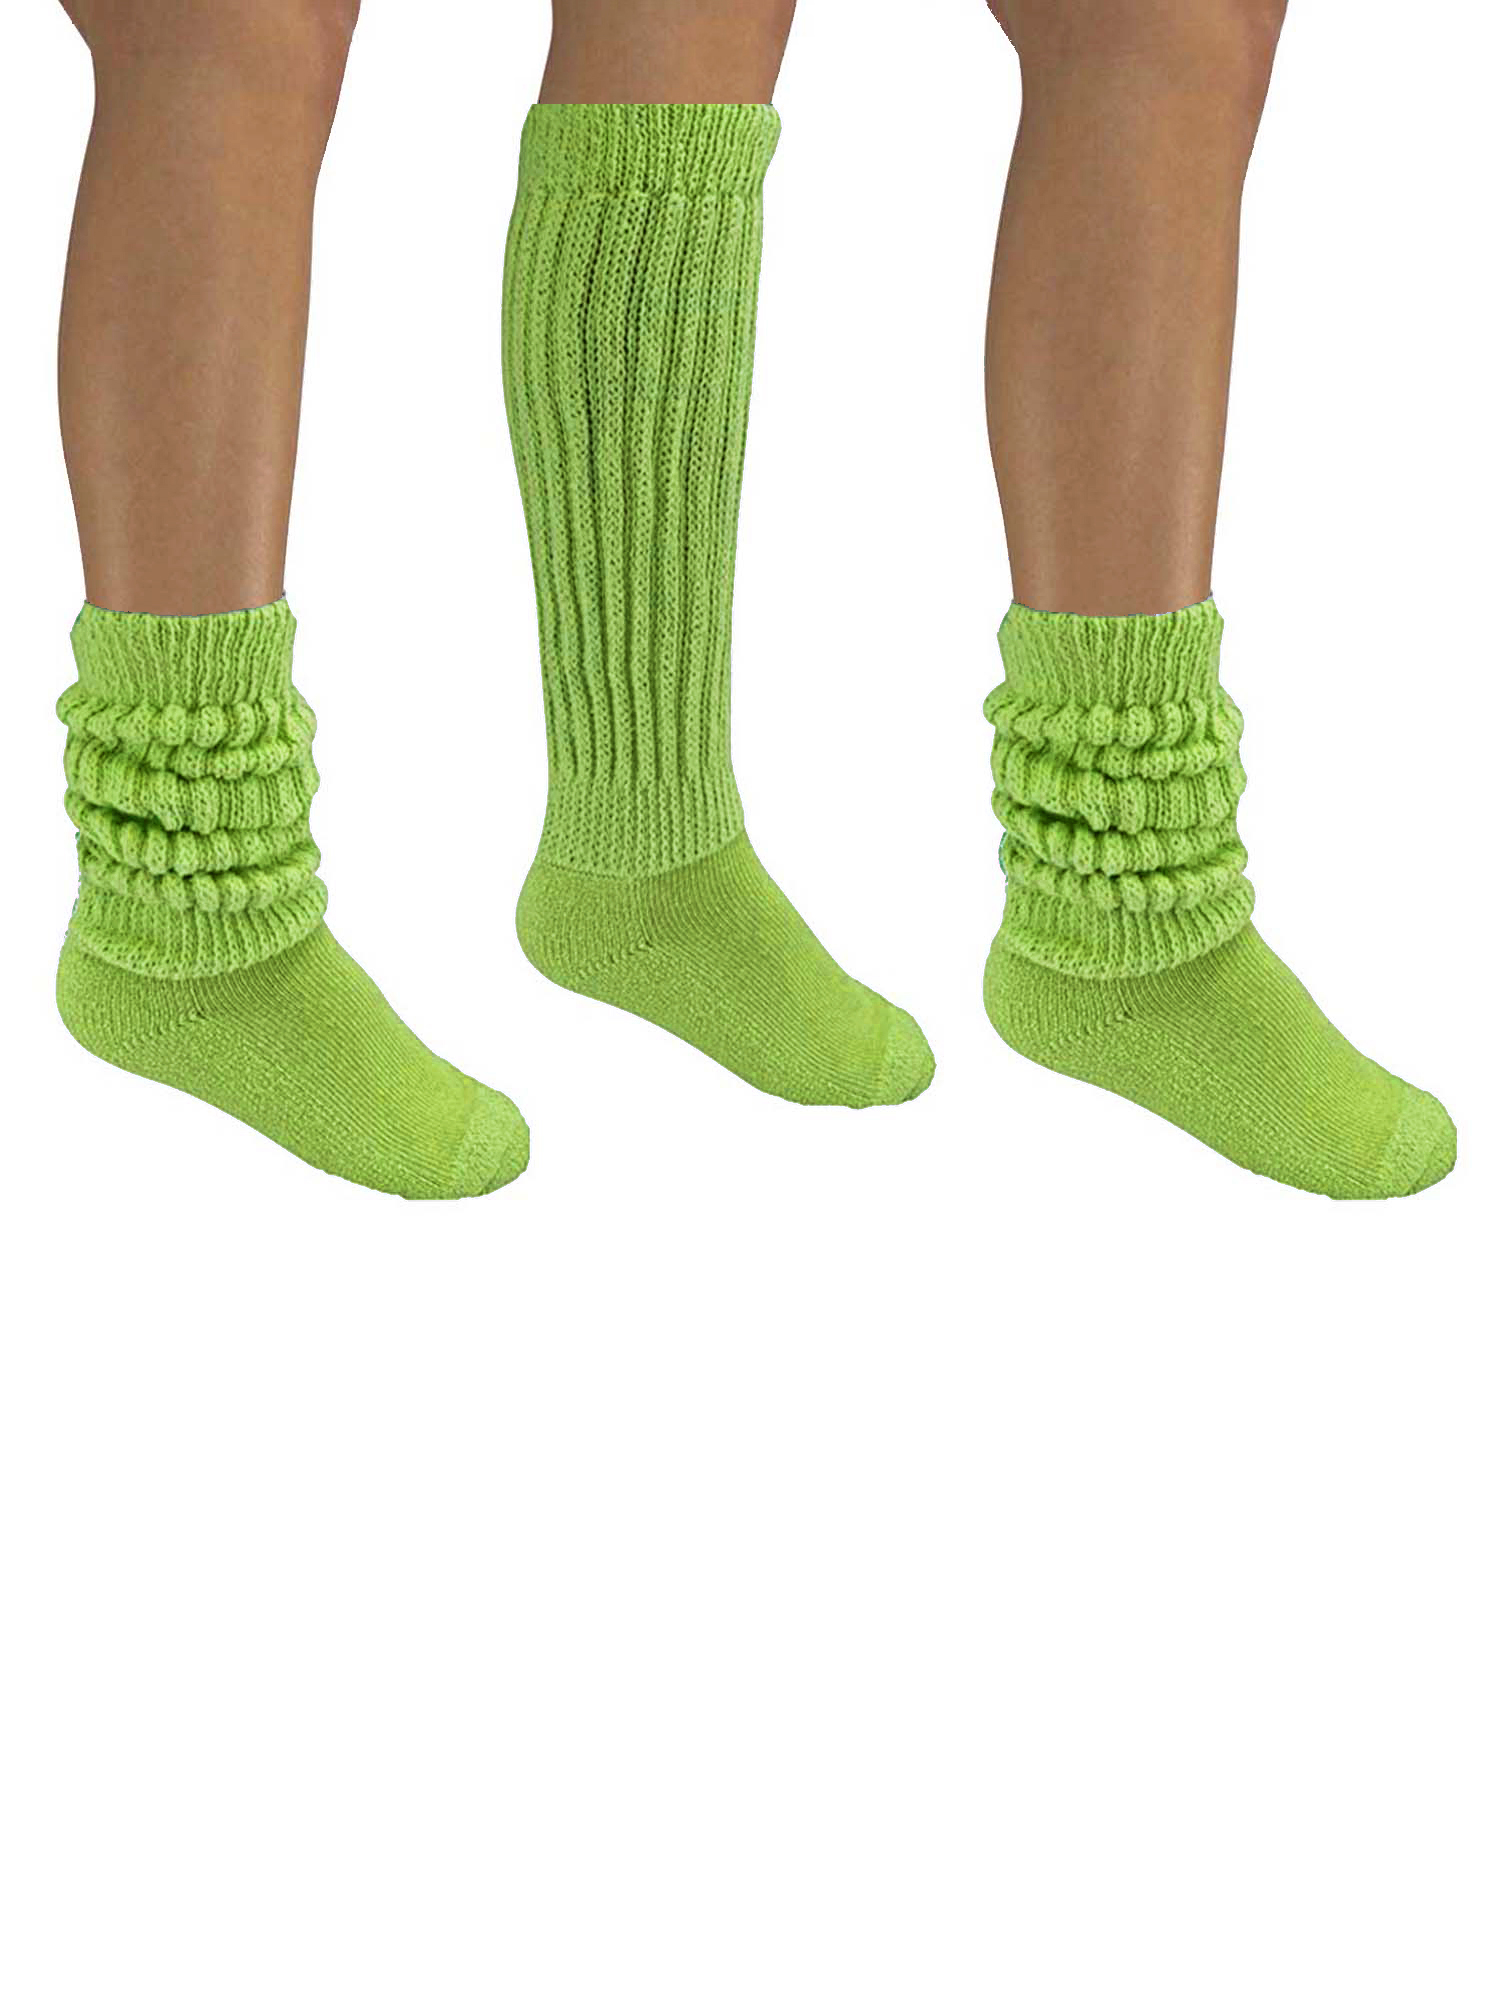 all cotton socks 2